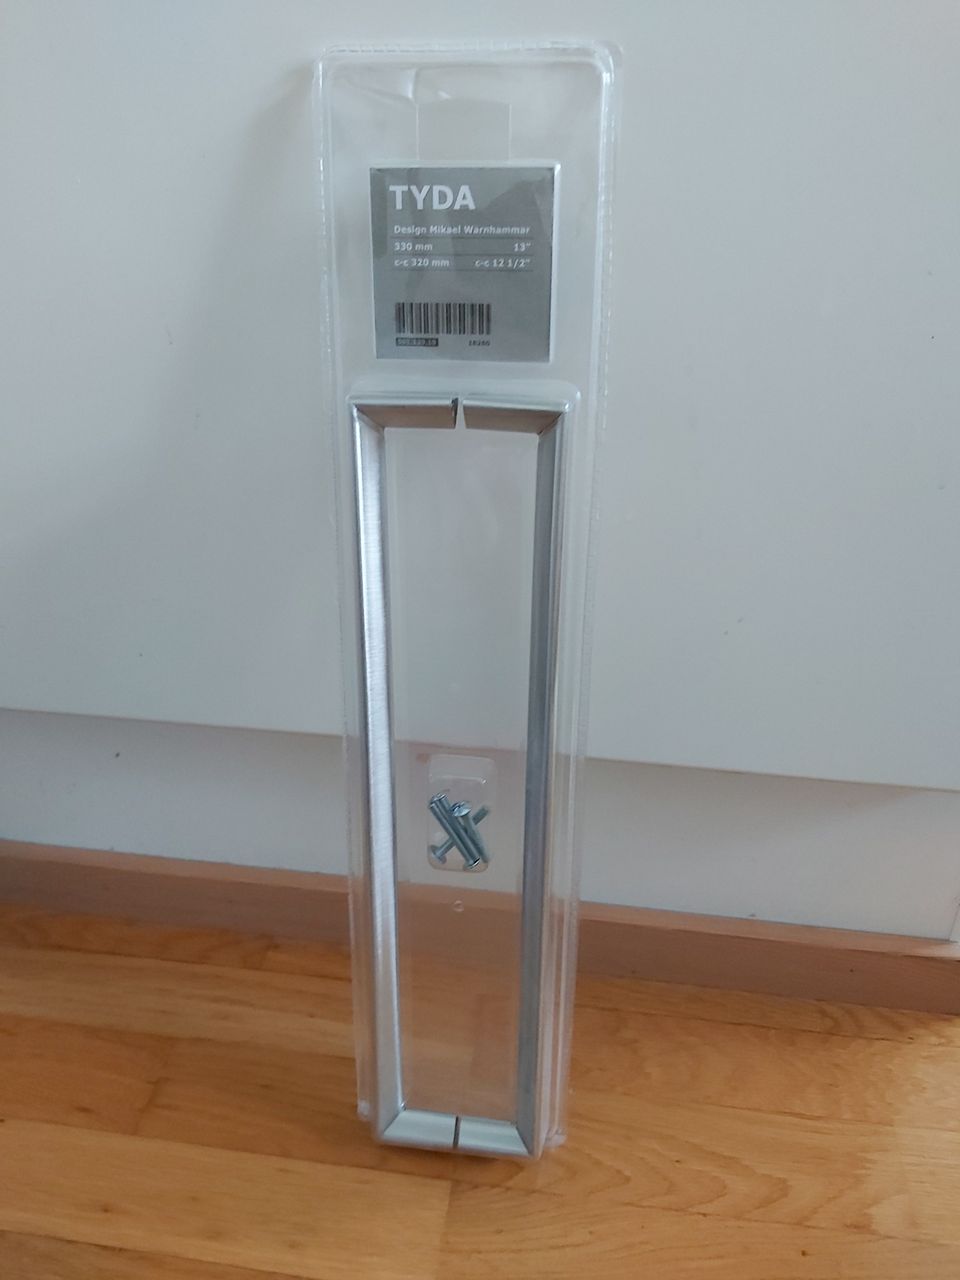 Ikea Tyda vedin